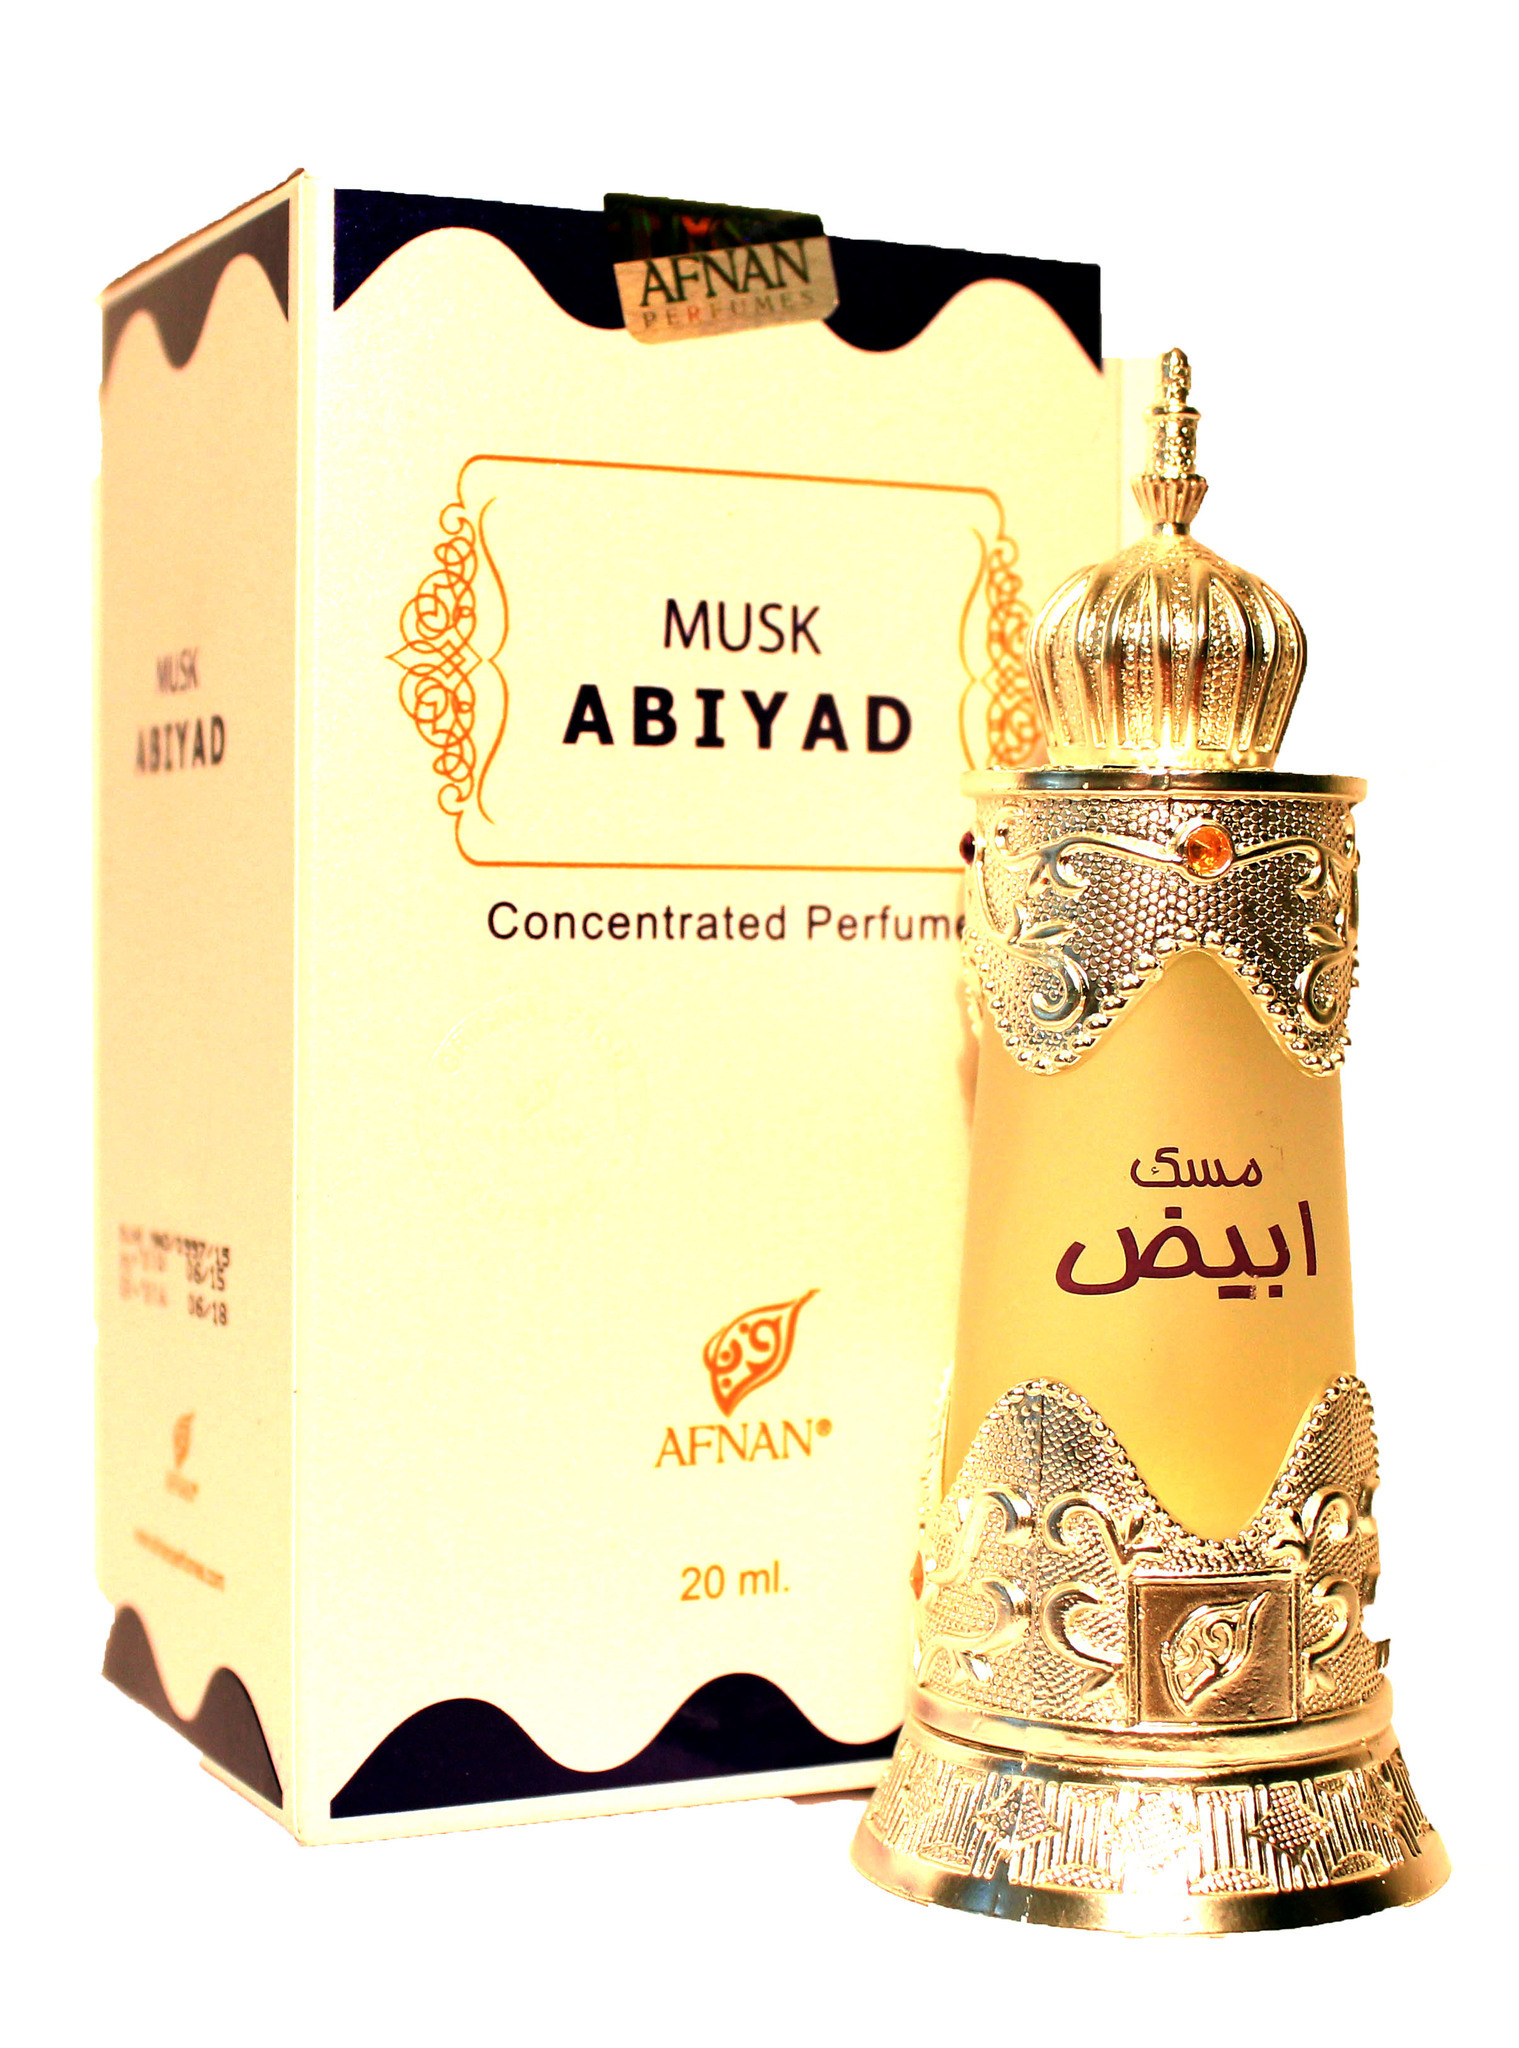 Пробник для Musk Abiyad Муск Абияд 1 мл арабские масляные духи от Афнан Парфюм Afnan Perfumes